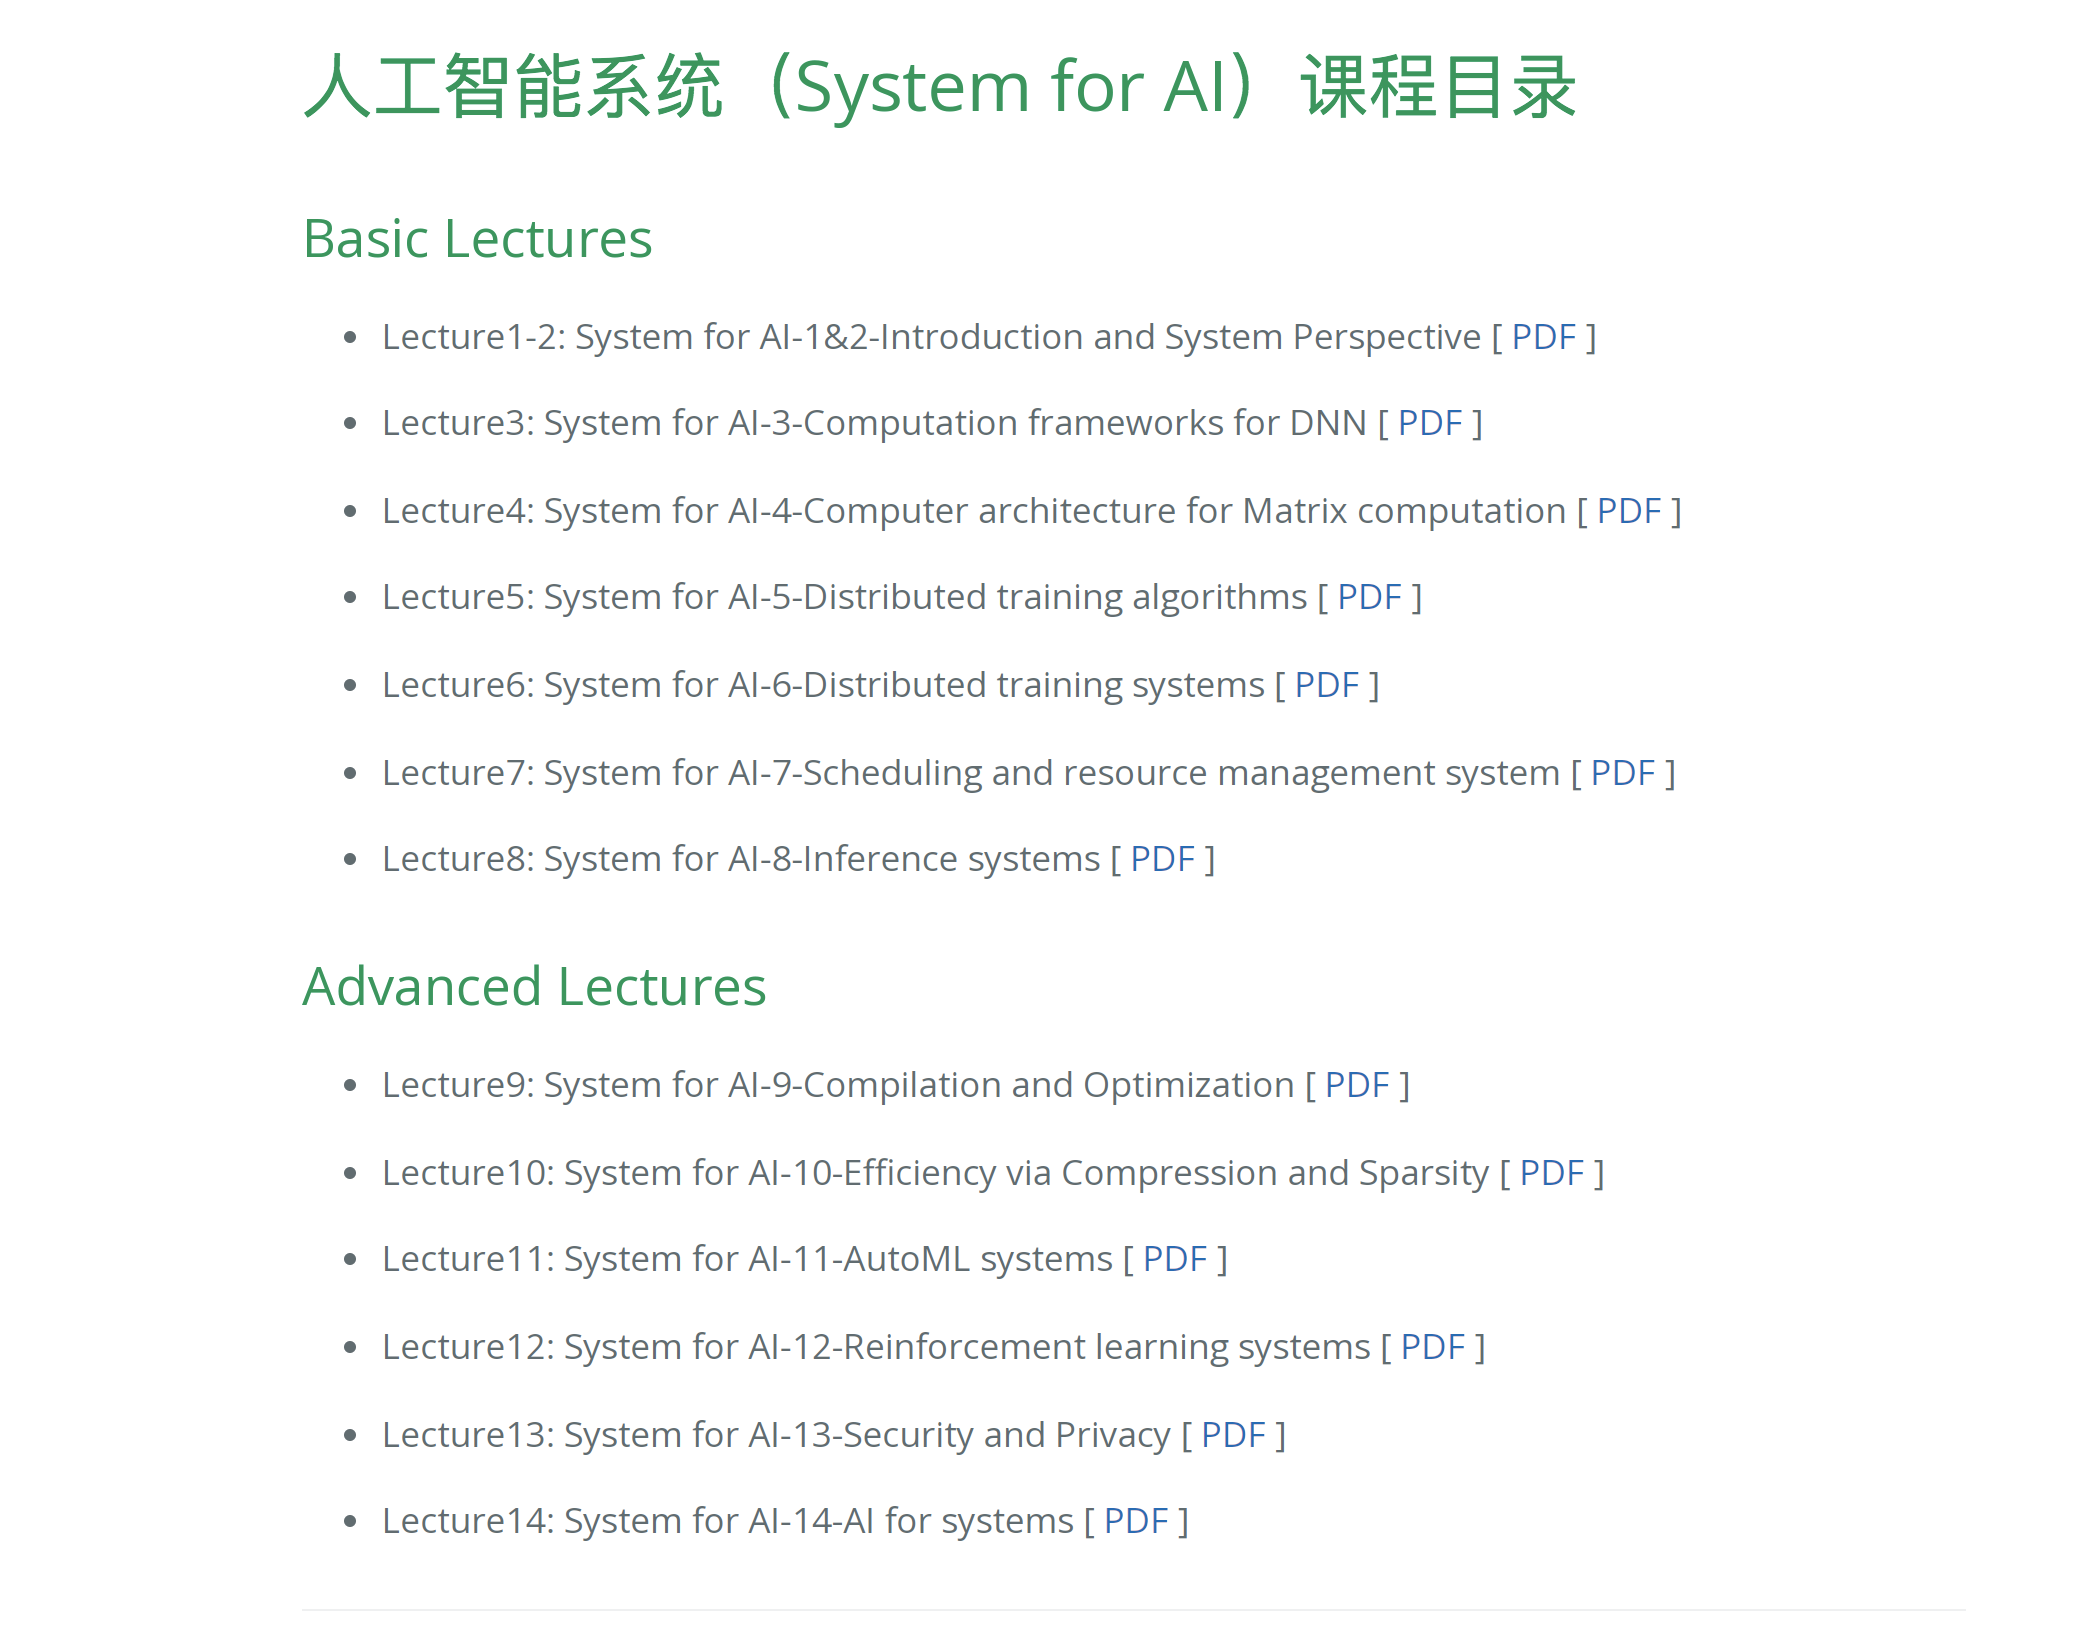 AI-System